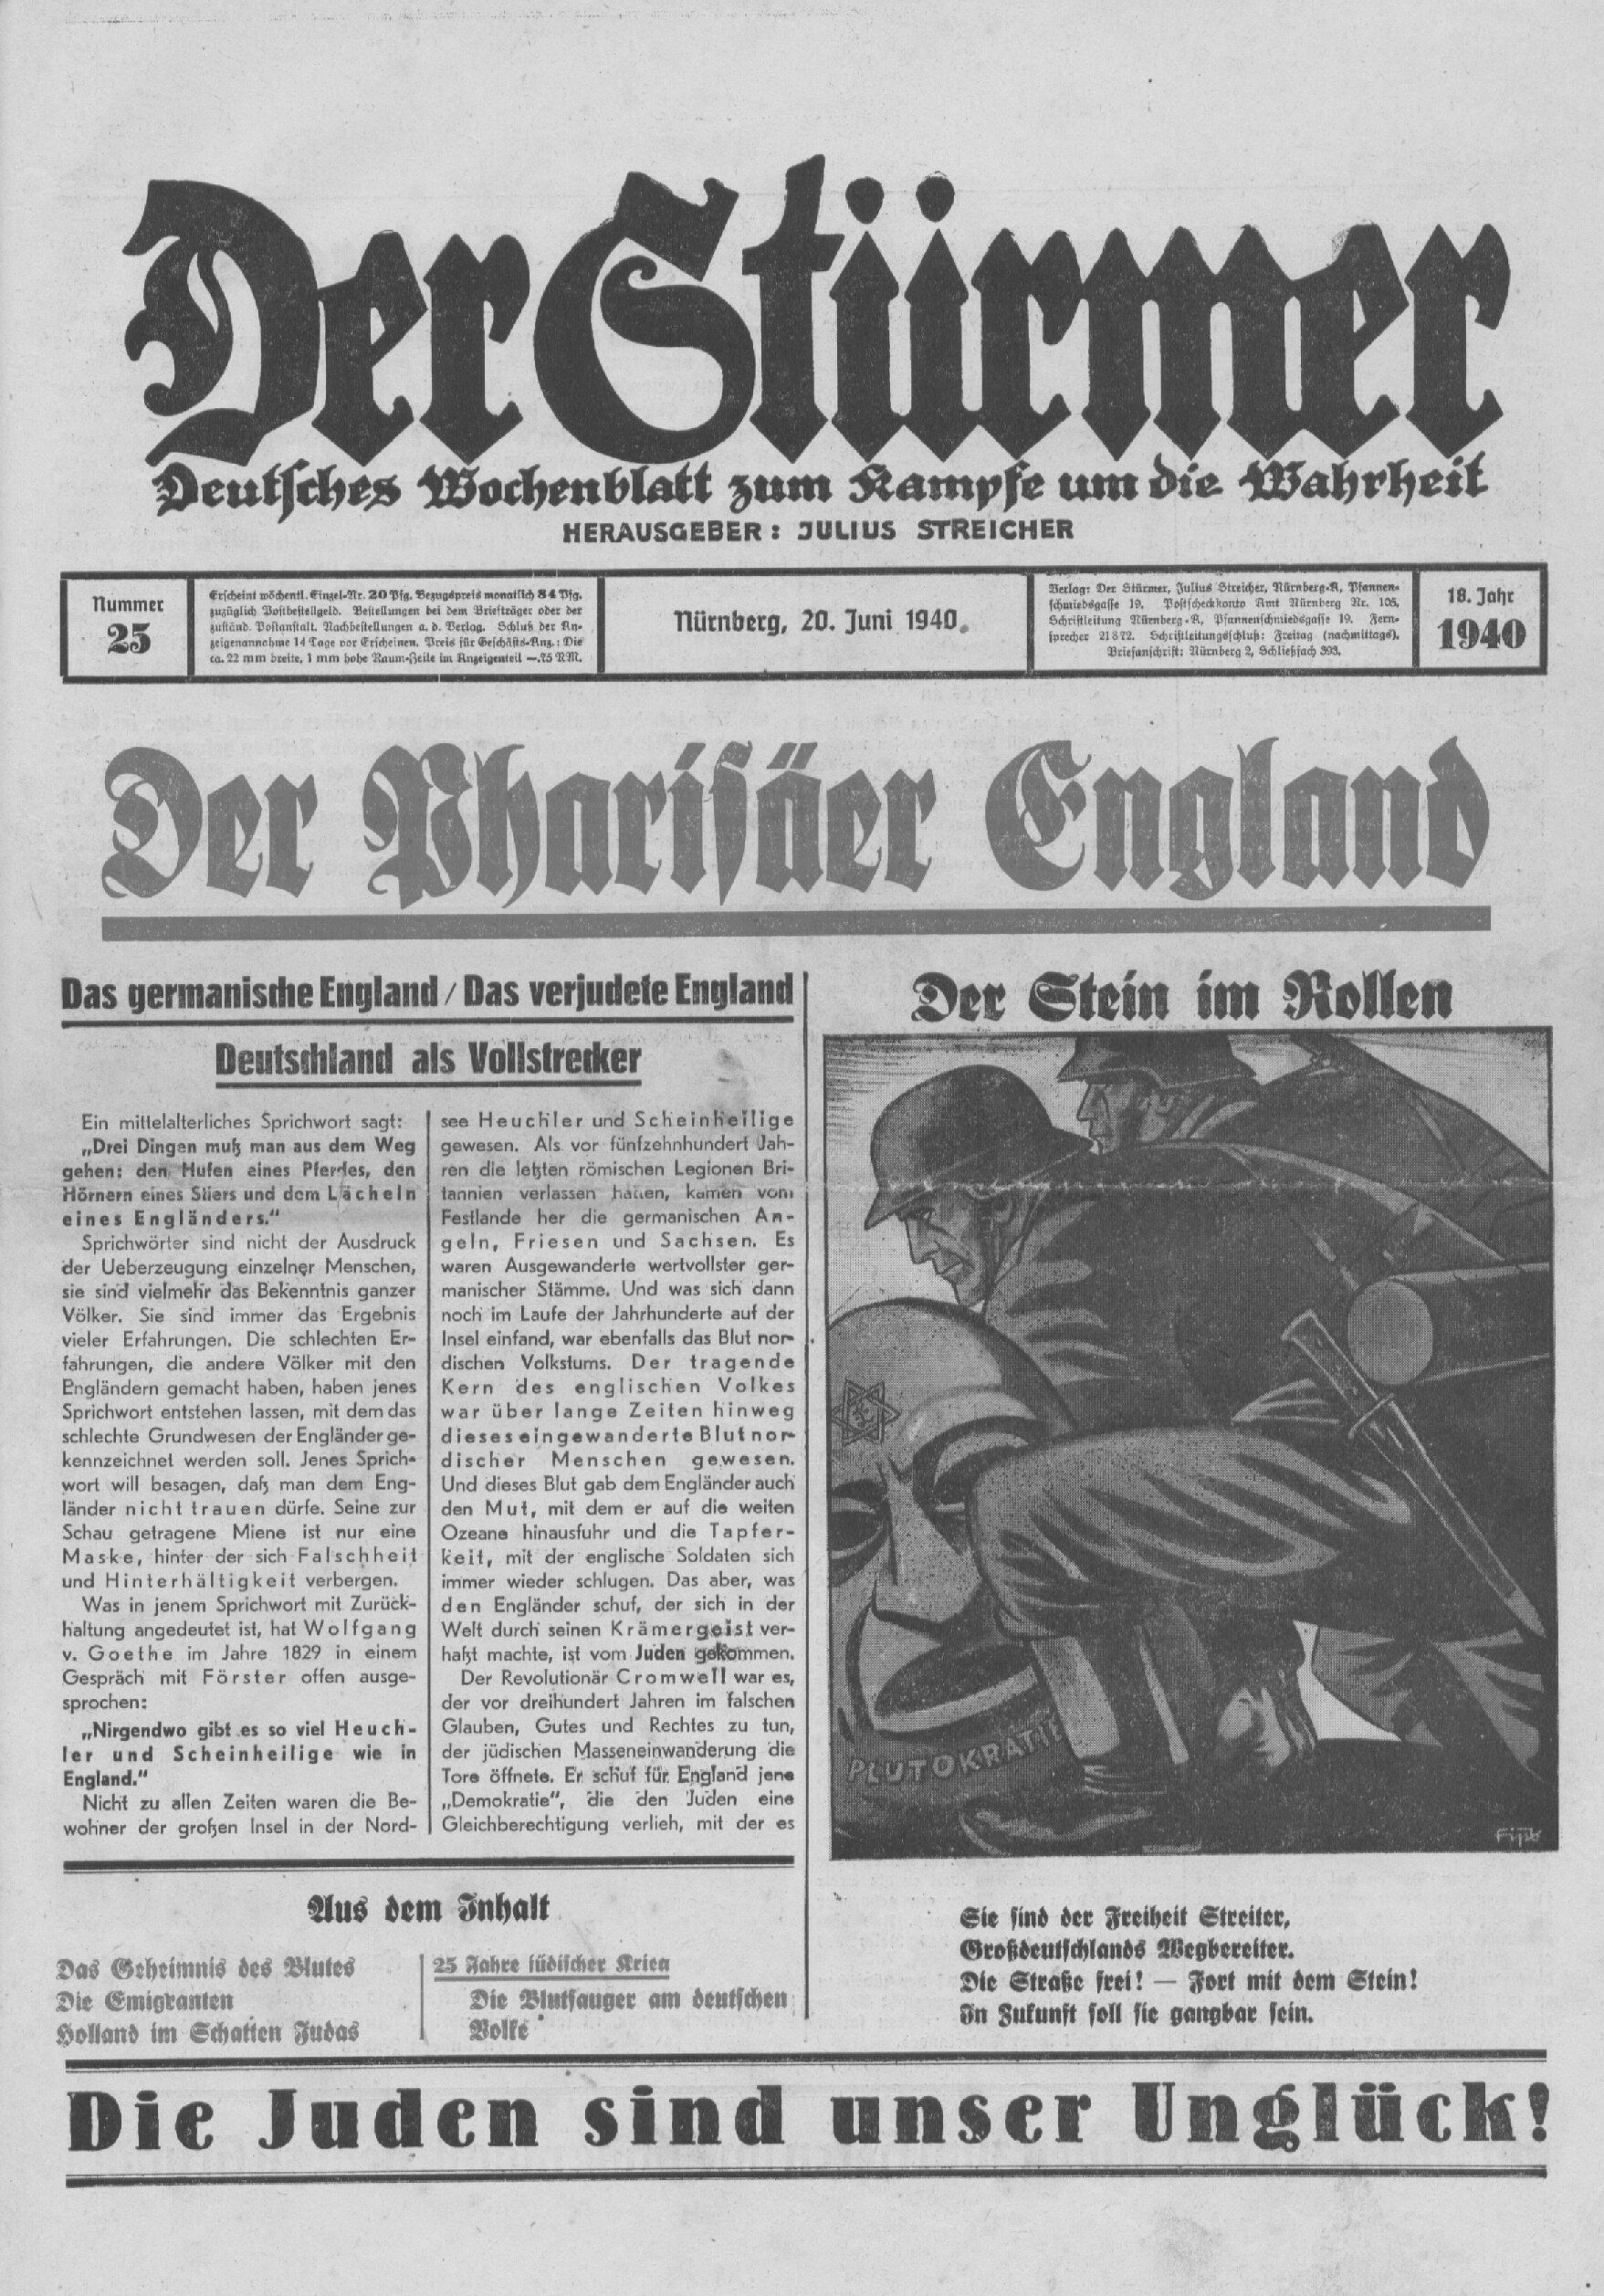 Der Stürmer - 1940 Nr. 25 - Der Pharisäer England